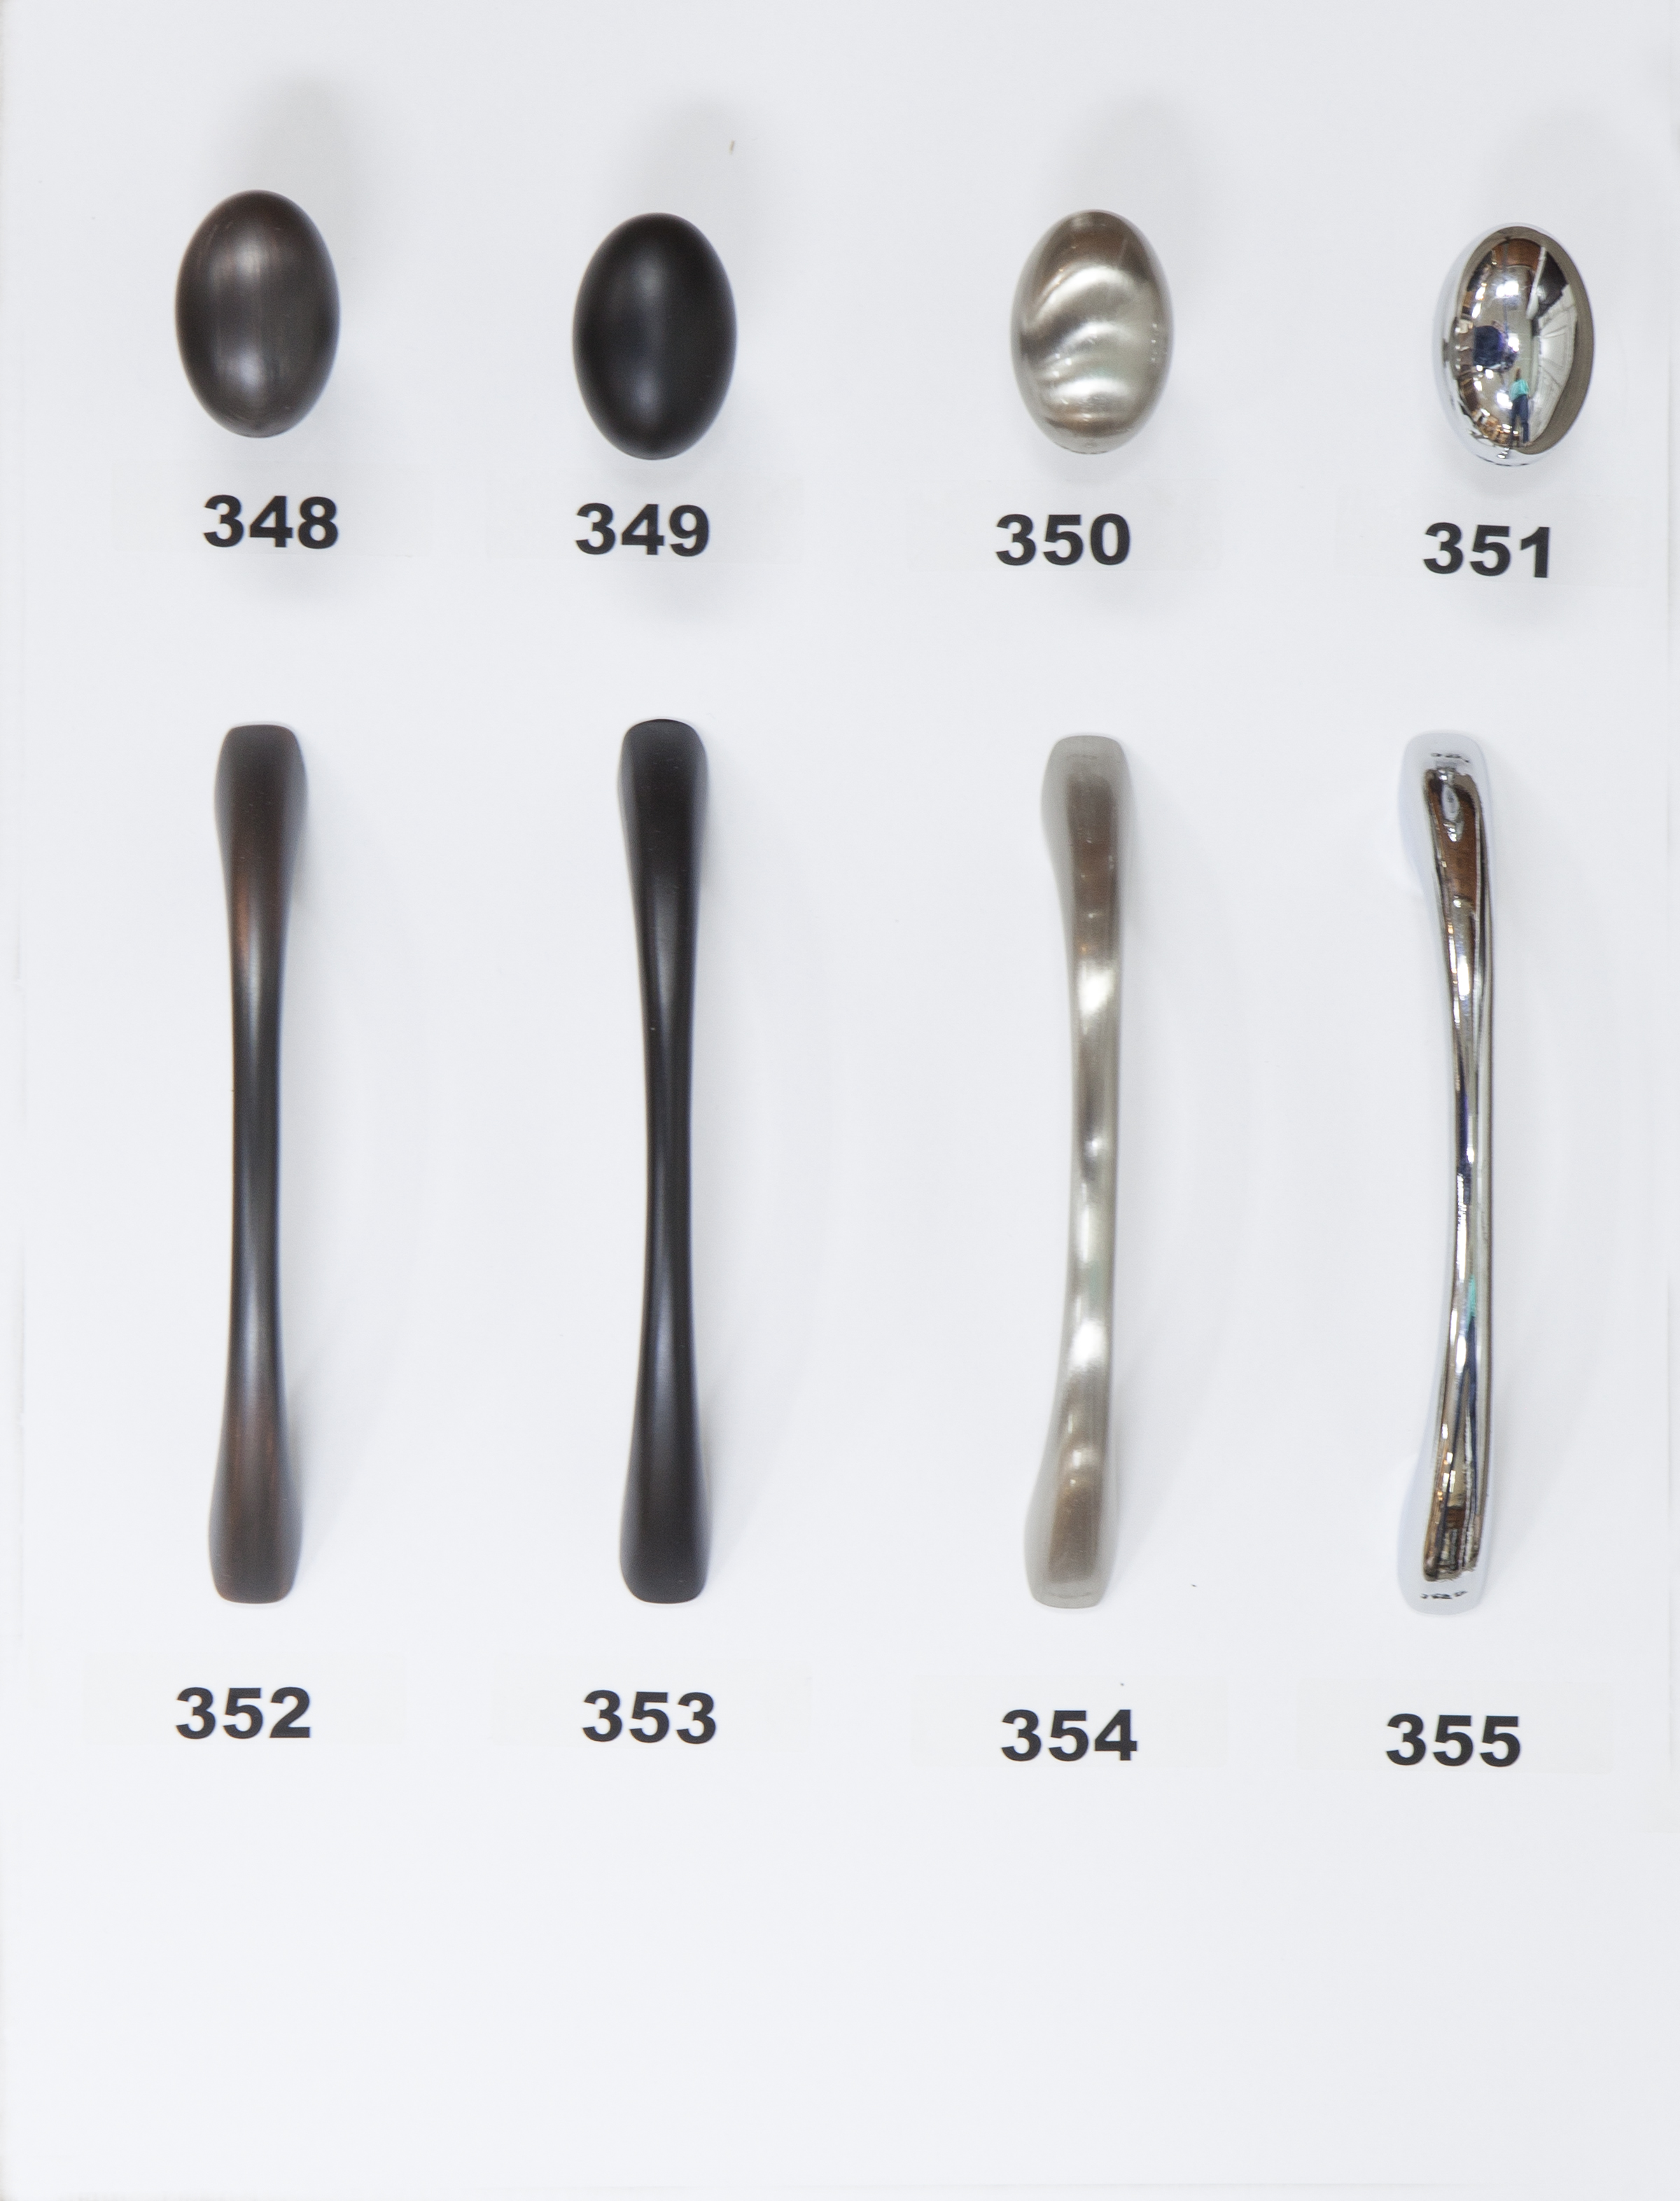  #348 - Knob - Oil Rubbed Bronze  #349 - Knob - Flat Black  #350 - Knob - Satin Nickel  #351 - Knob - Polished Chrome  #352 - 3 3/4” Center - Oil Rubbed Bronze   #353 - 3 3/4” Center - Flat Black  #354 - 3 3/4” Center - Satin Nickel  #355 - 3 3/4” Ce